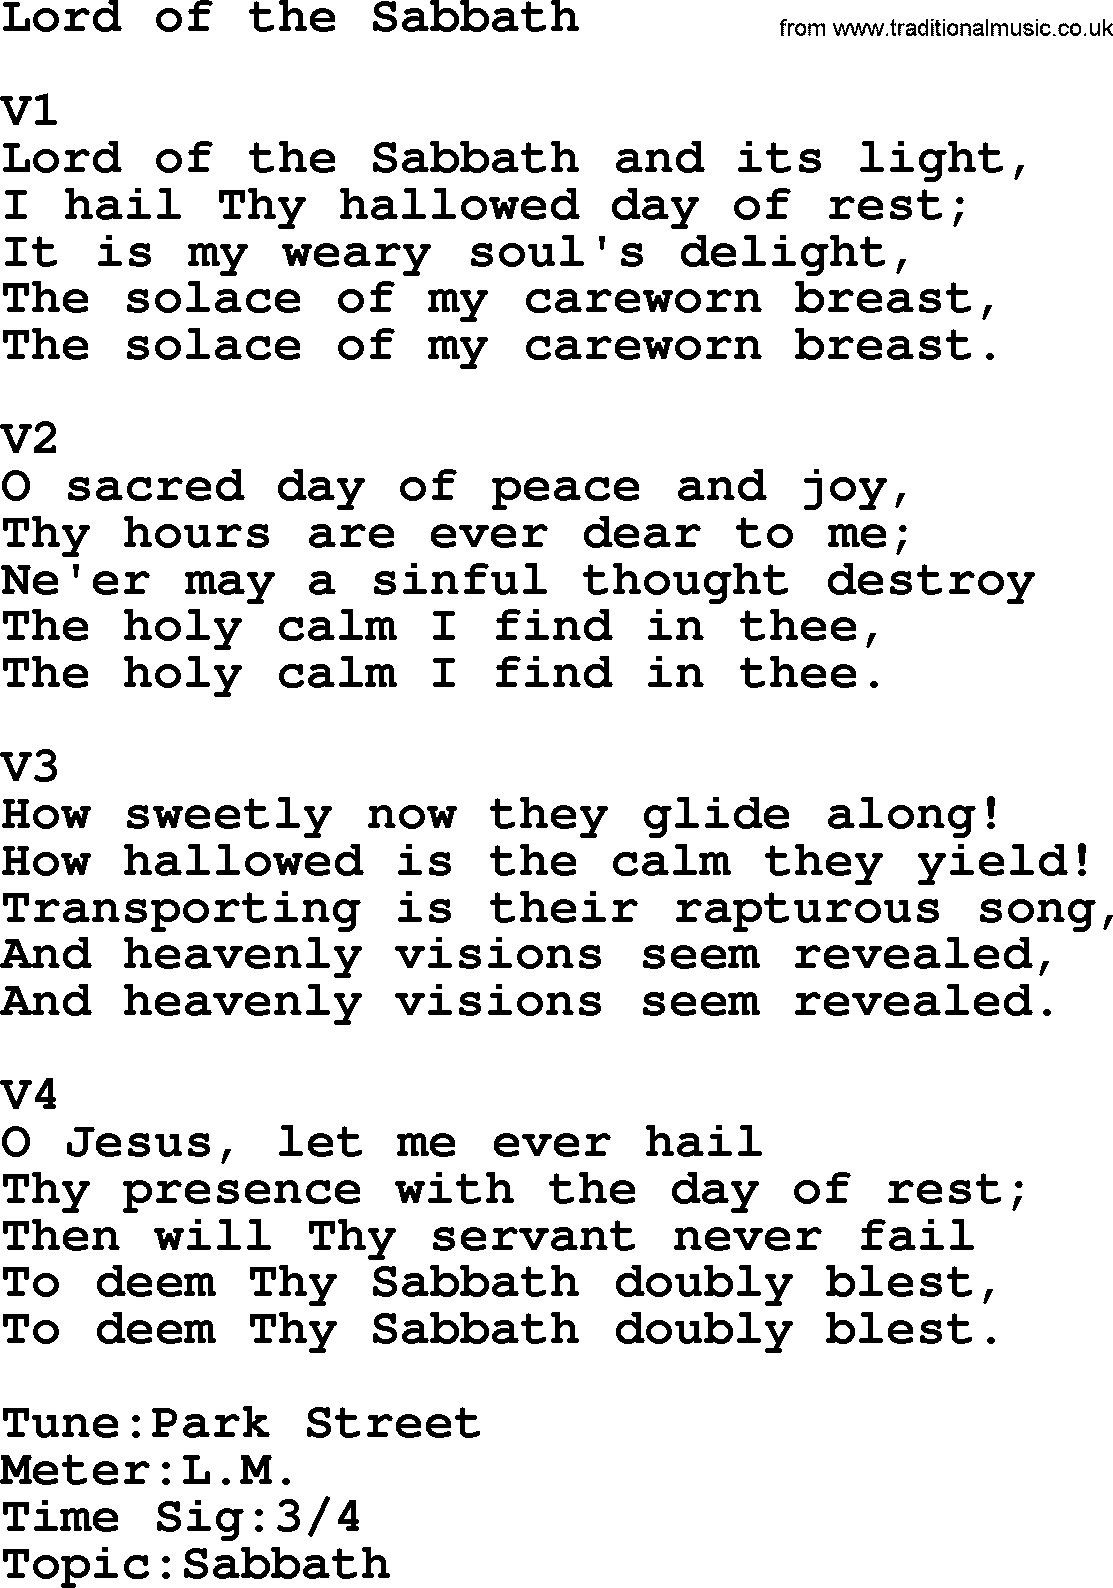 Adventist Hynms collection, Hymn: Lord Of The Sabbath, lyrics with PDF